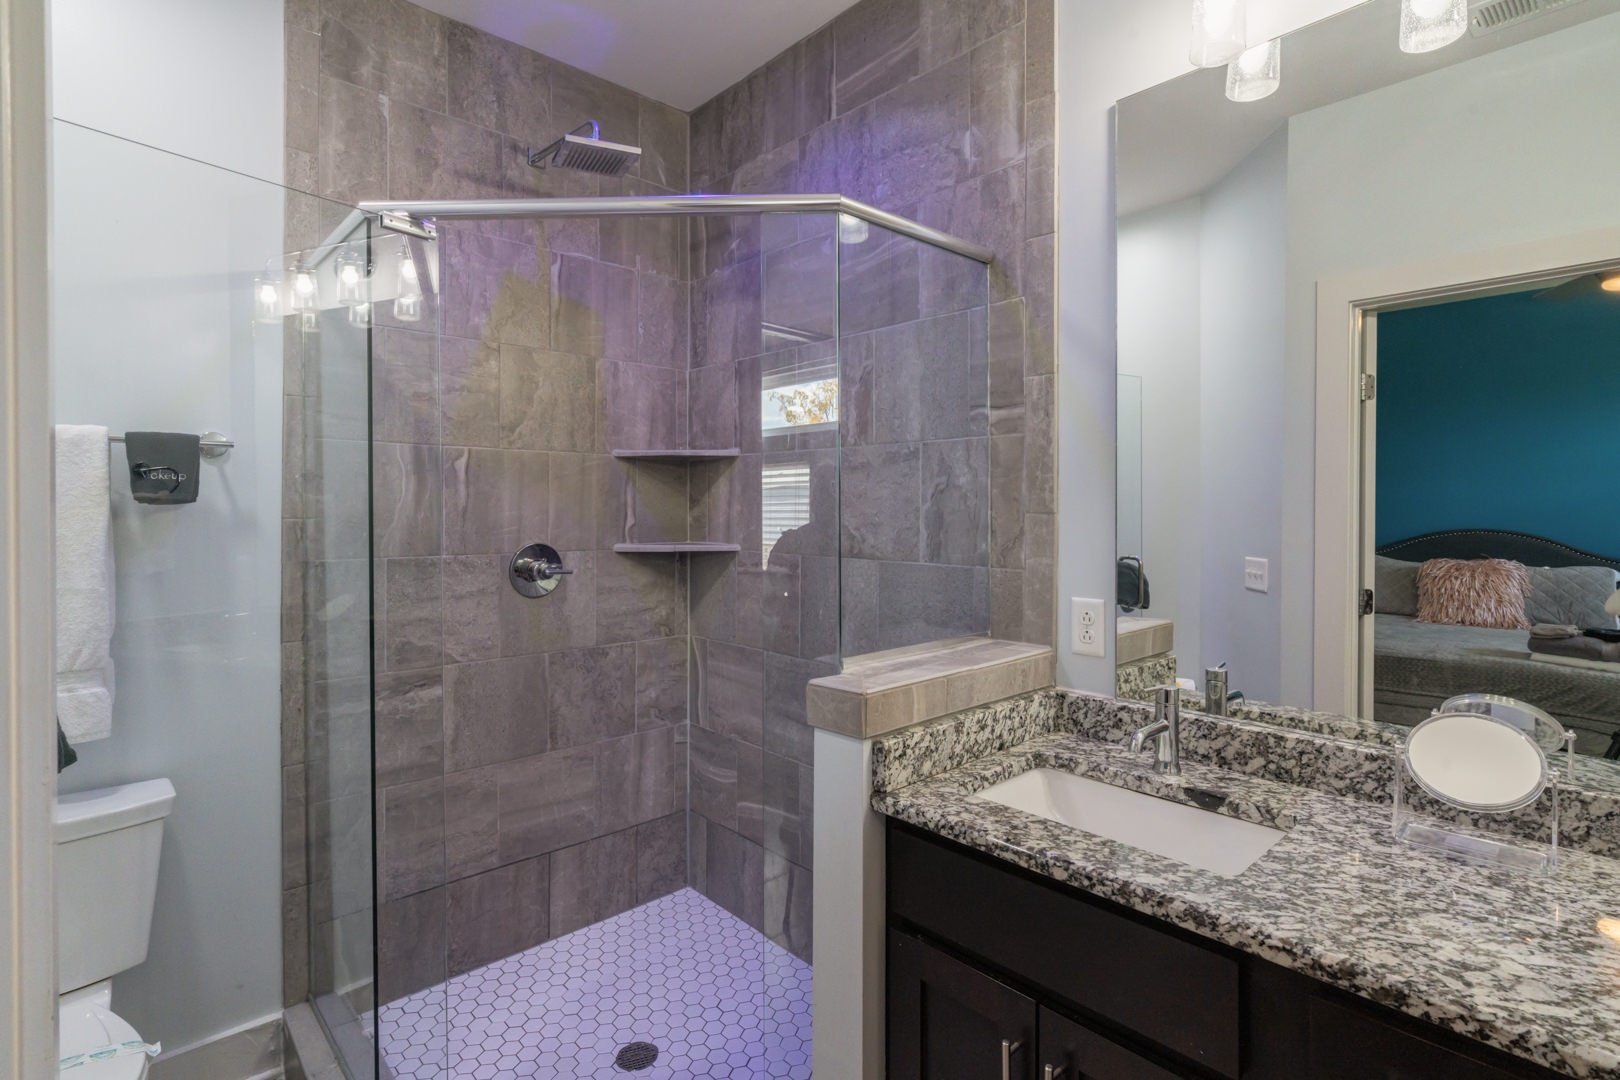 Bathroom off master bedroom with dual vanity and walk-in shower